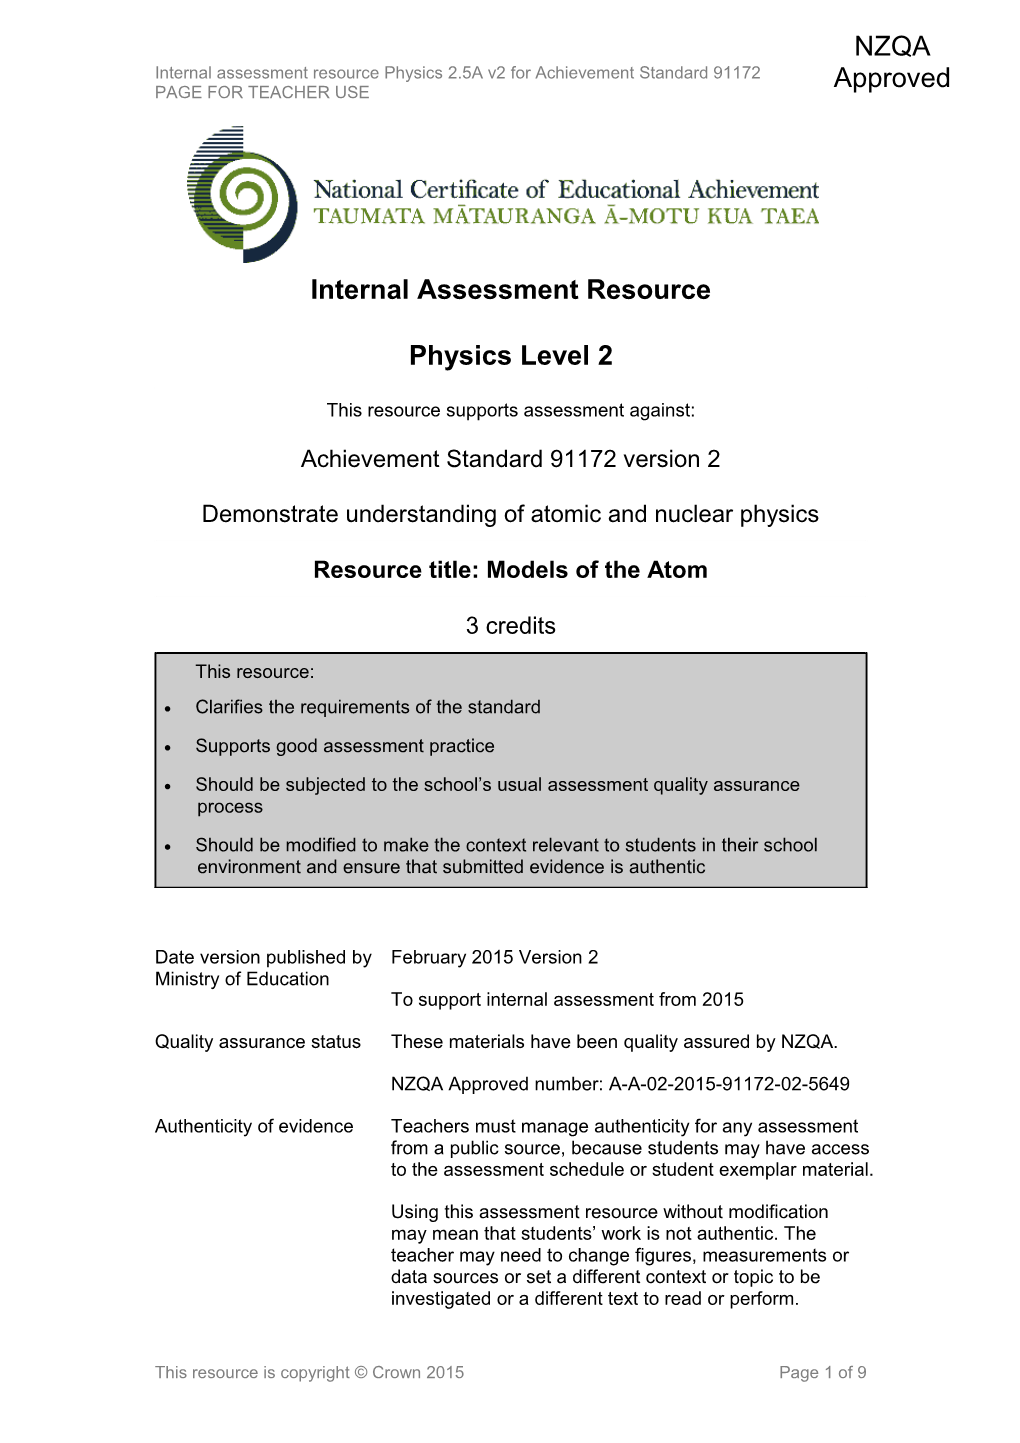 Level 2 Physics Internal Assessment Resource